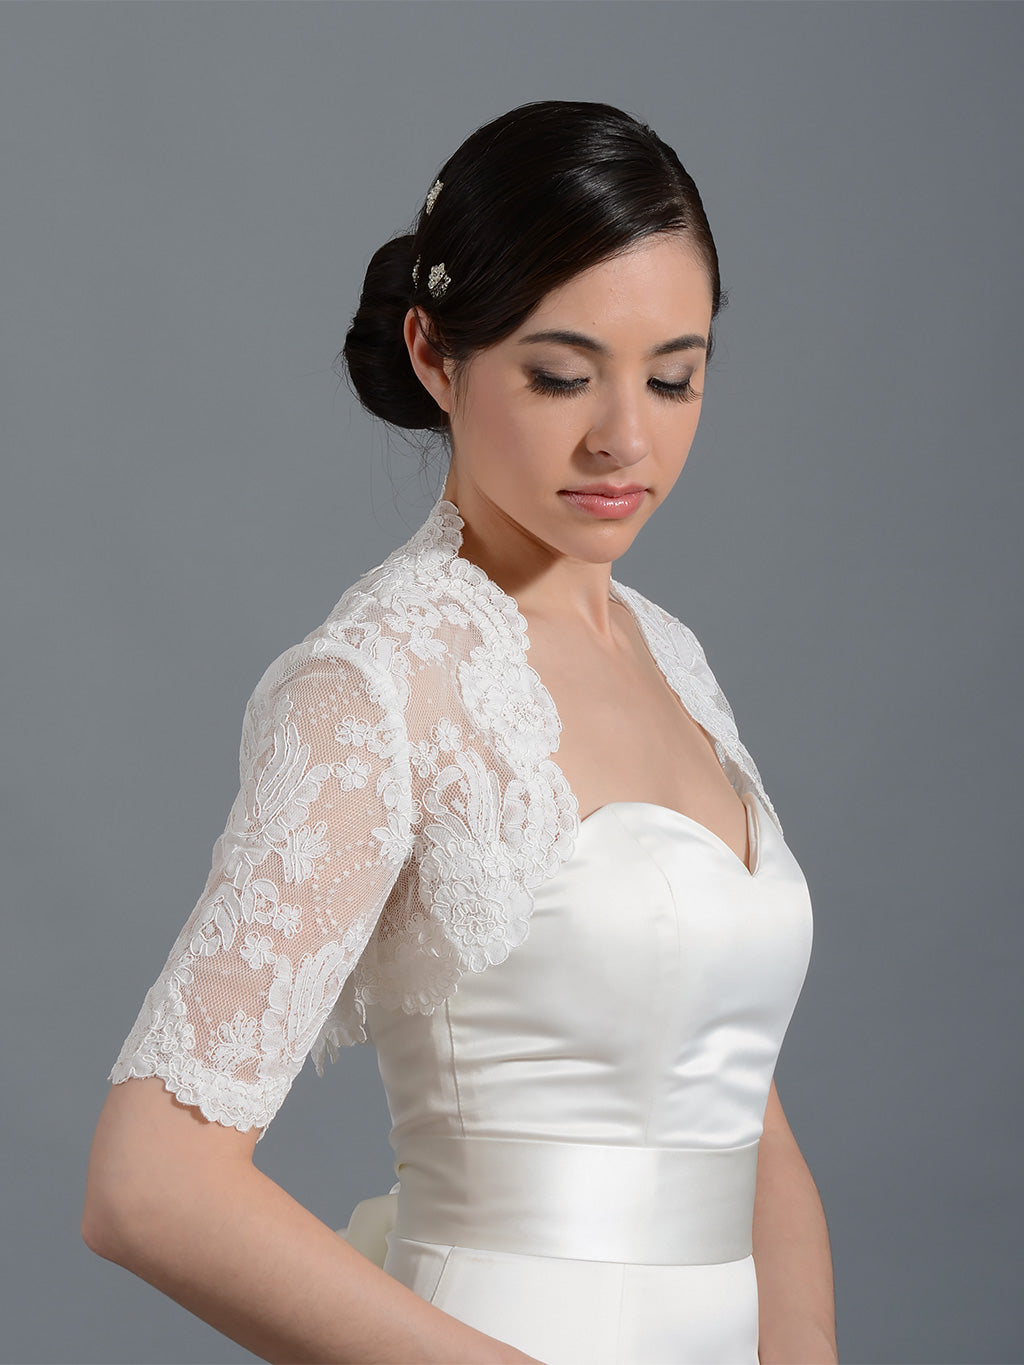 Elbow sleeve bridal alencon lace bolero jacket - Lace_078